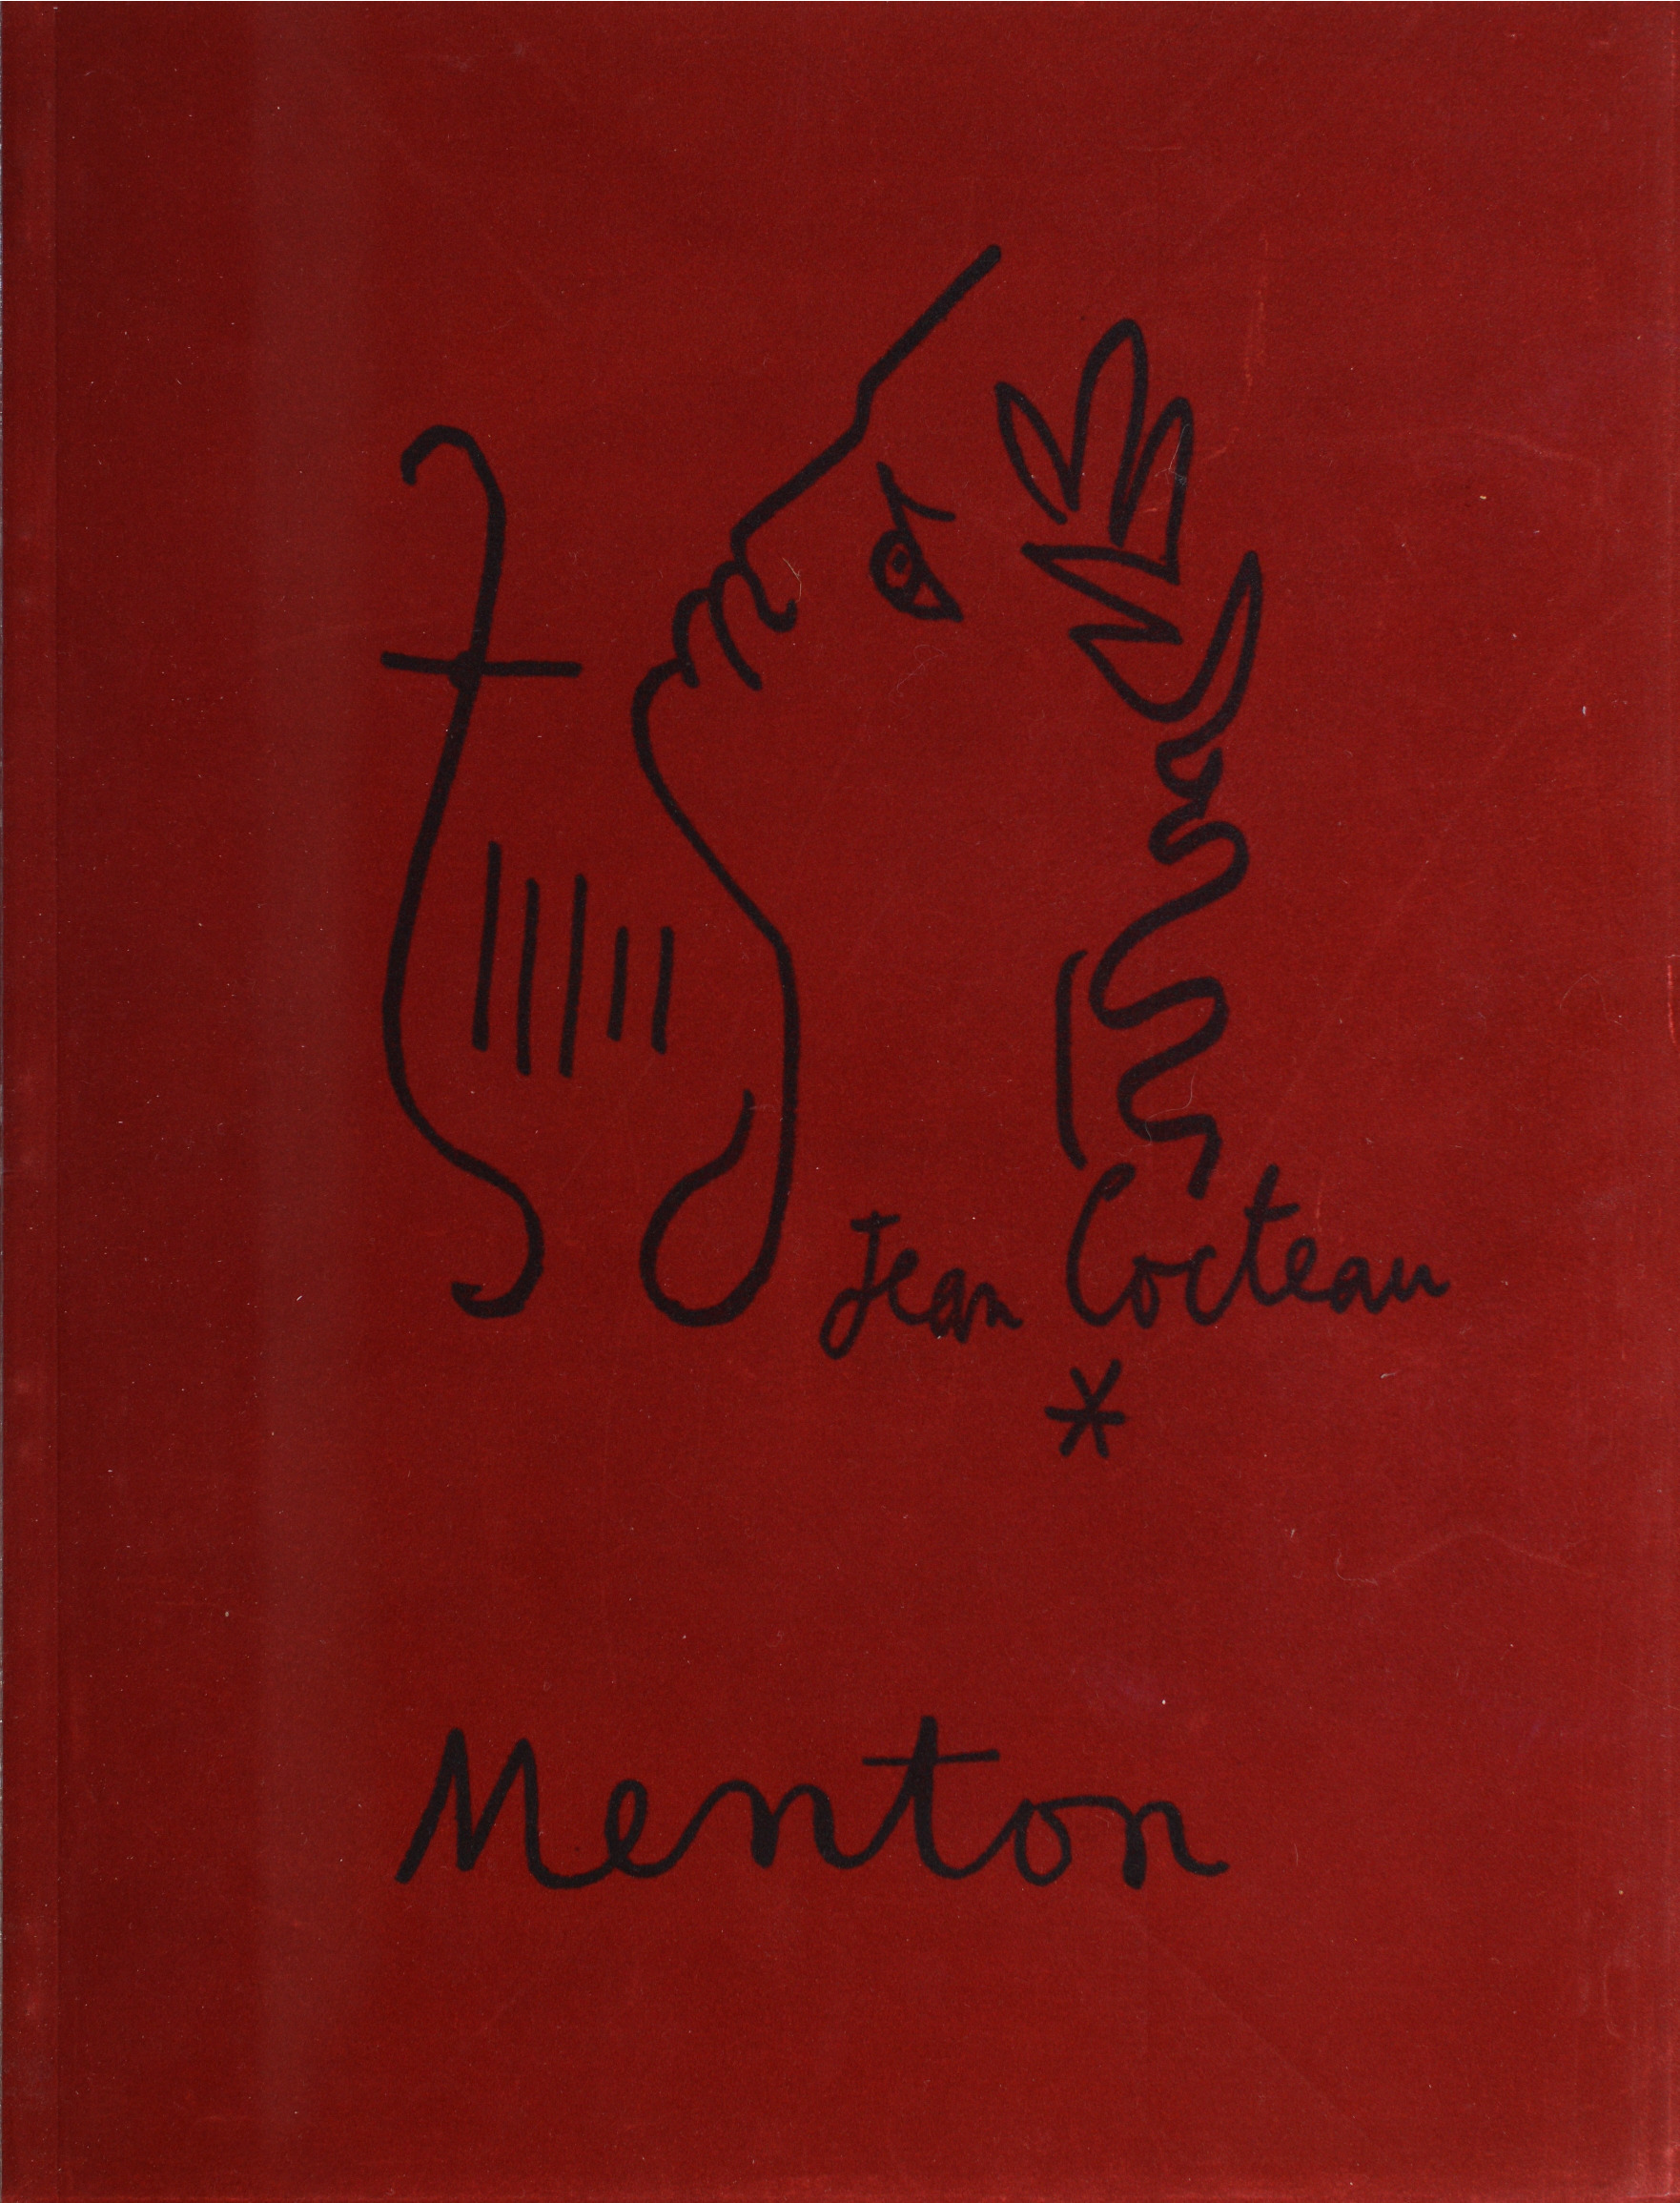 Festival de musique de Menton 1959